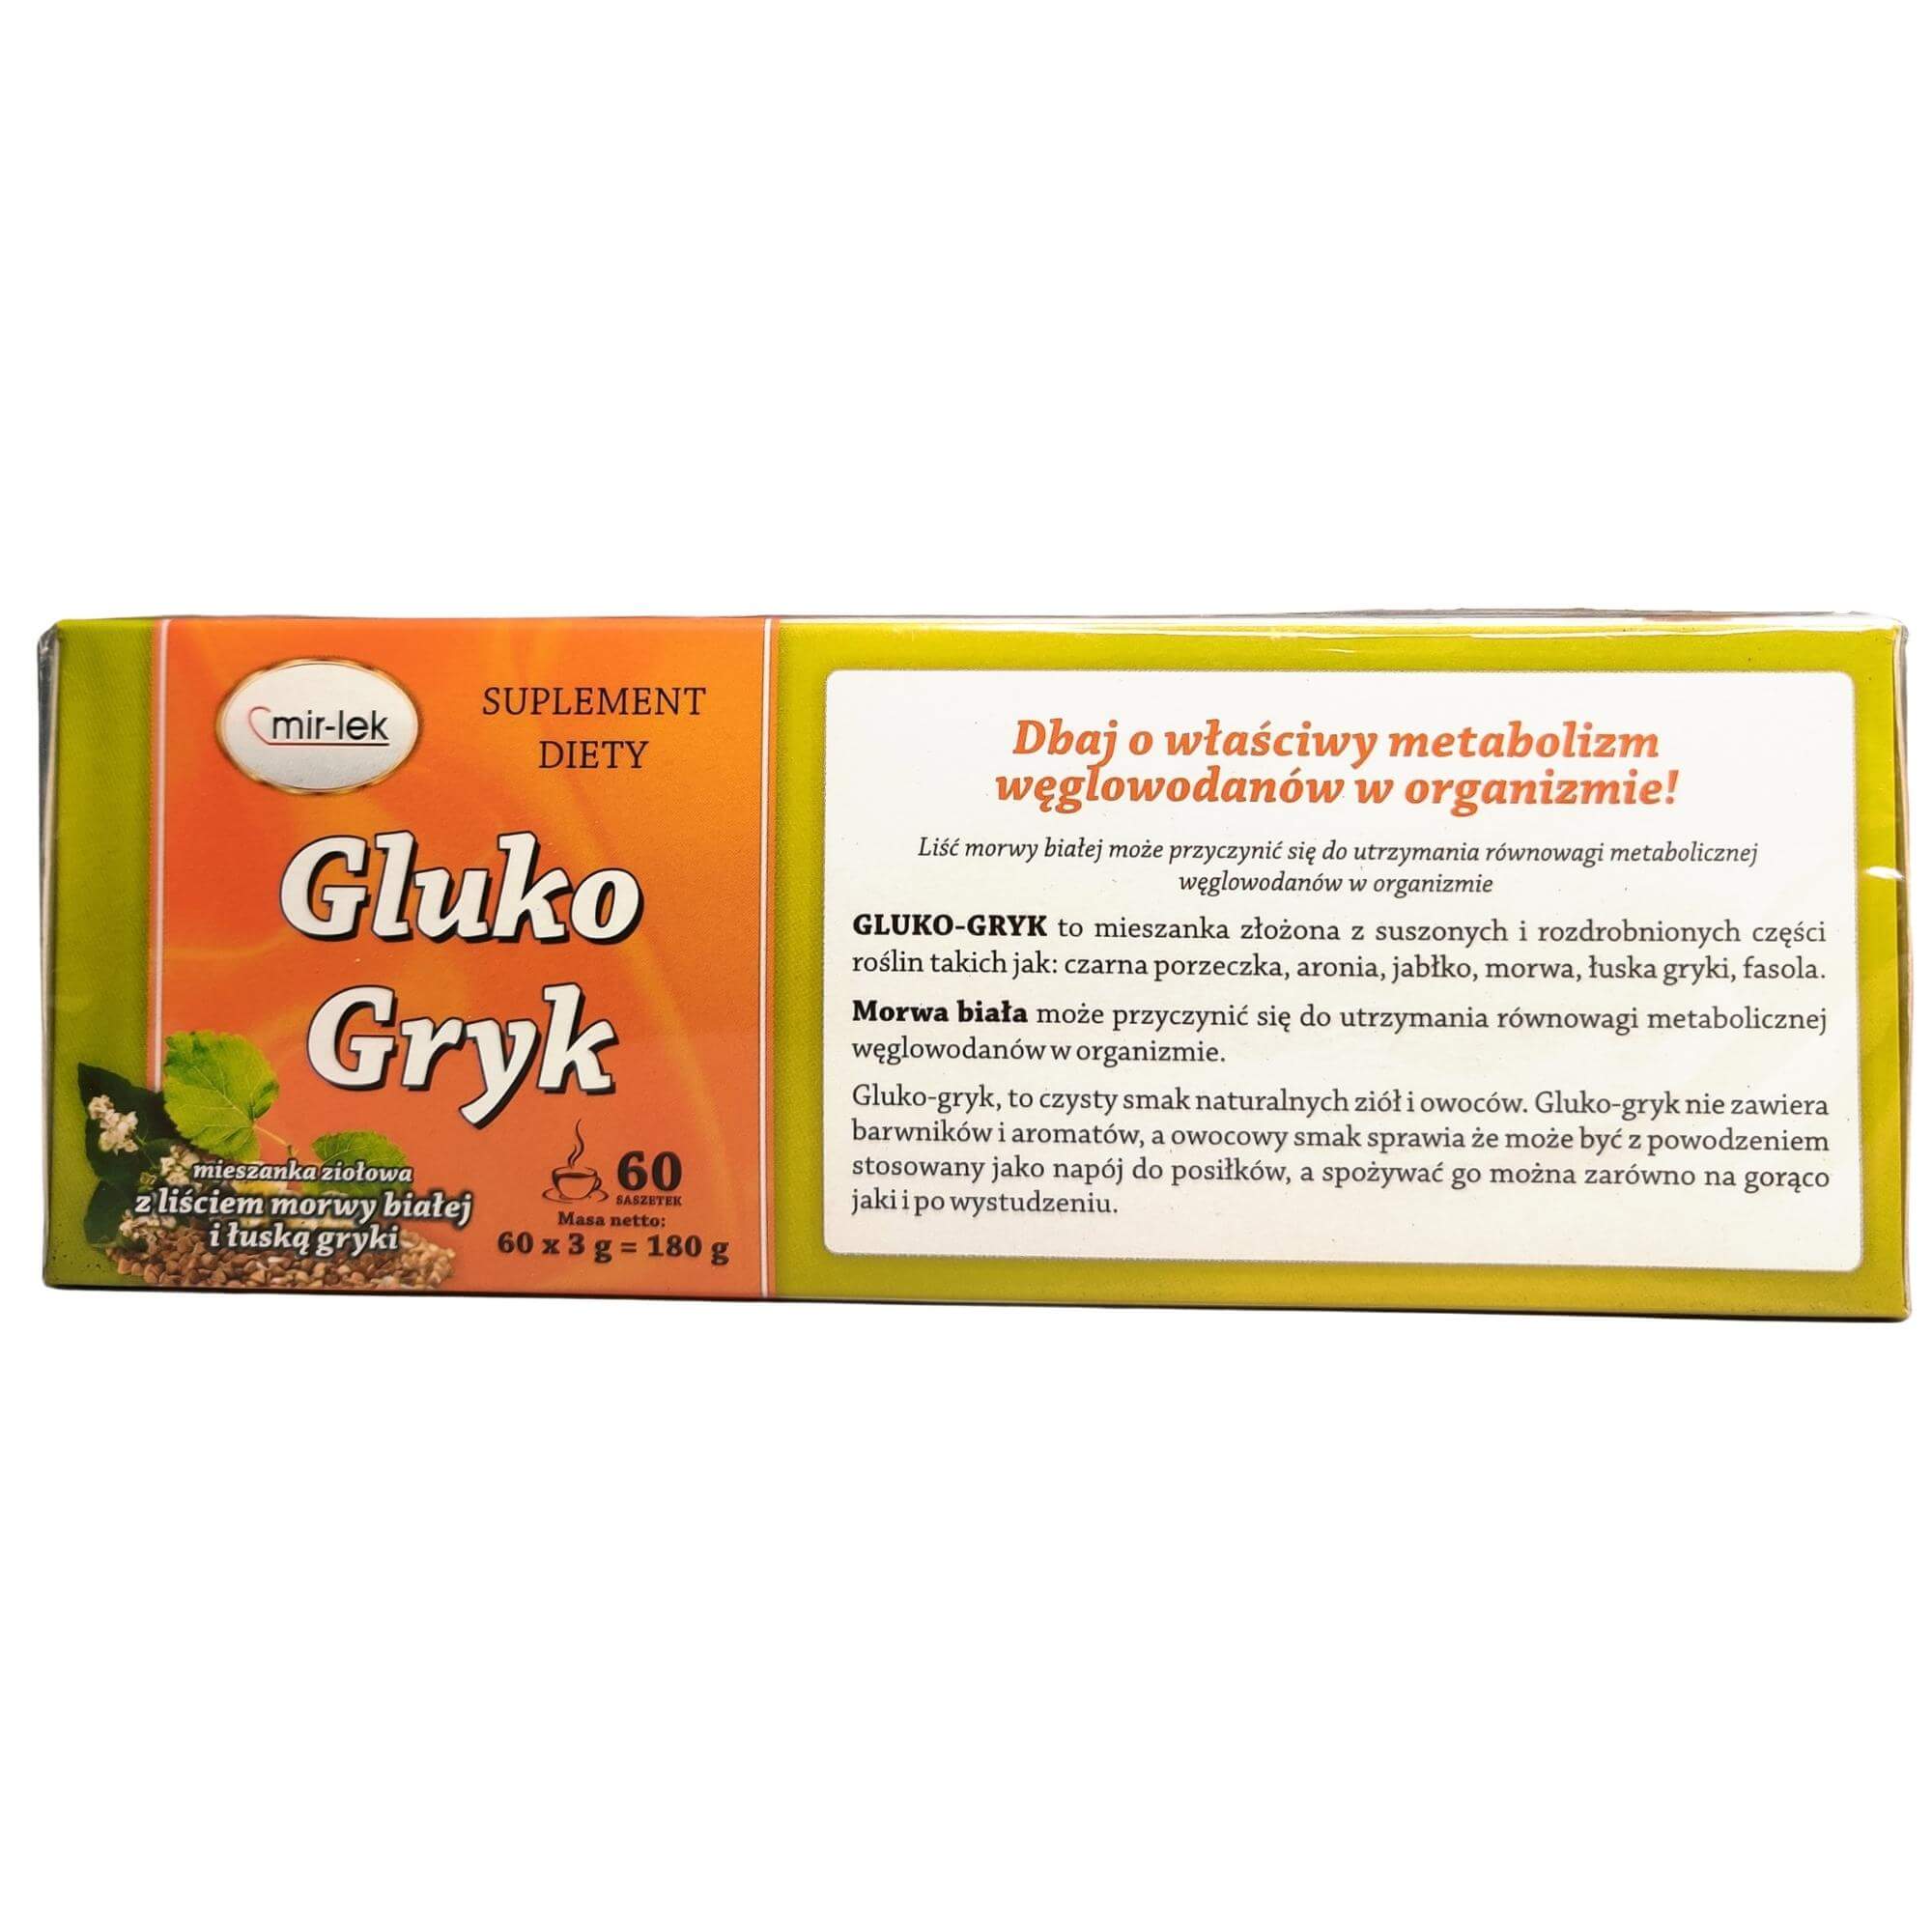 Herbata Gluko Gryk fix (60 x 3 g) 180 g - Mir-lek